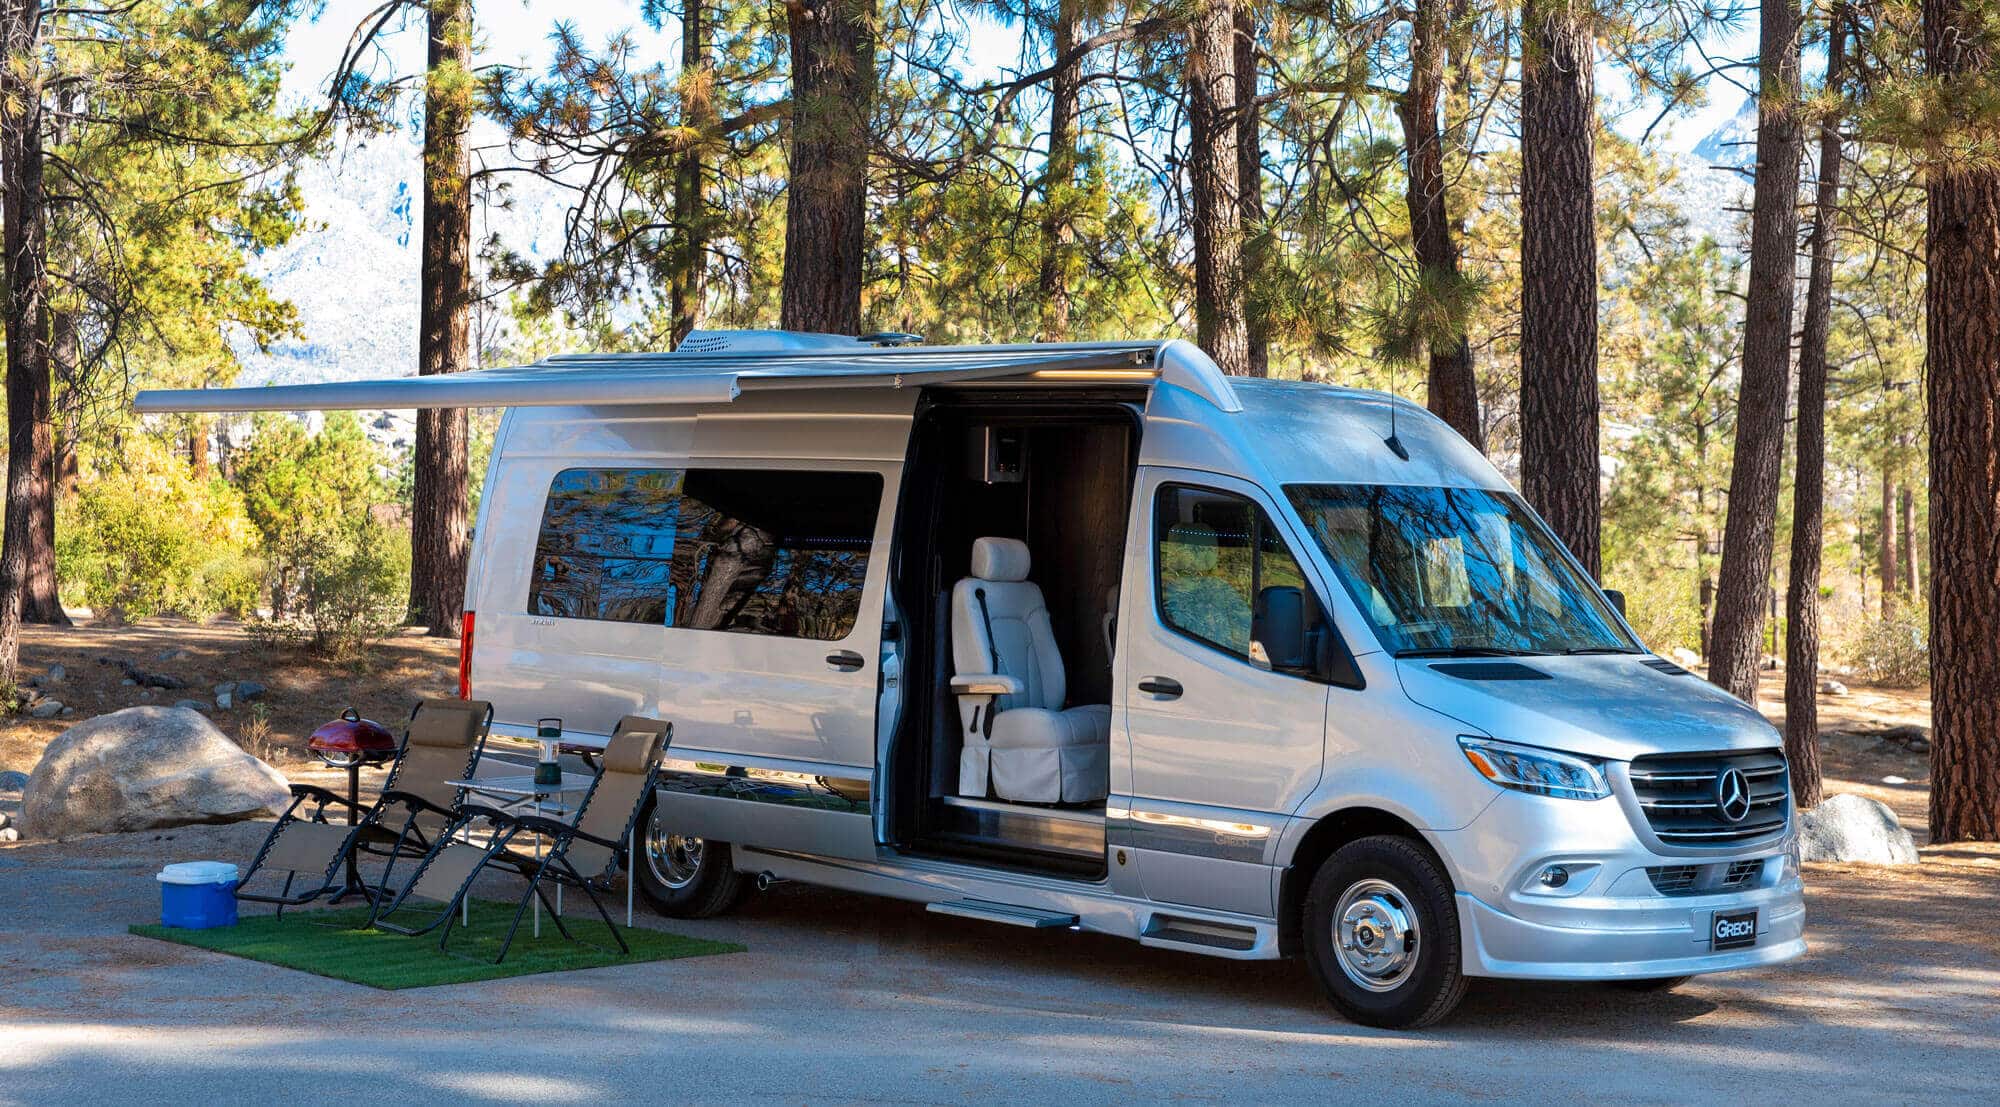 Grech RV - Luxury Class B Camper Vans.